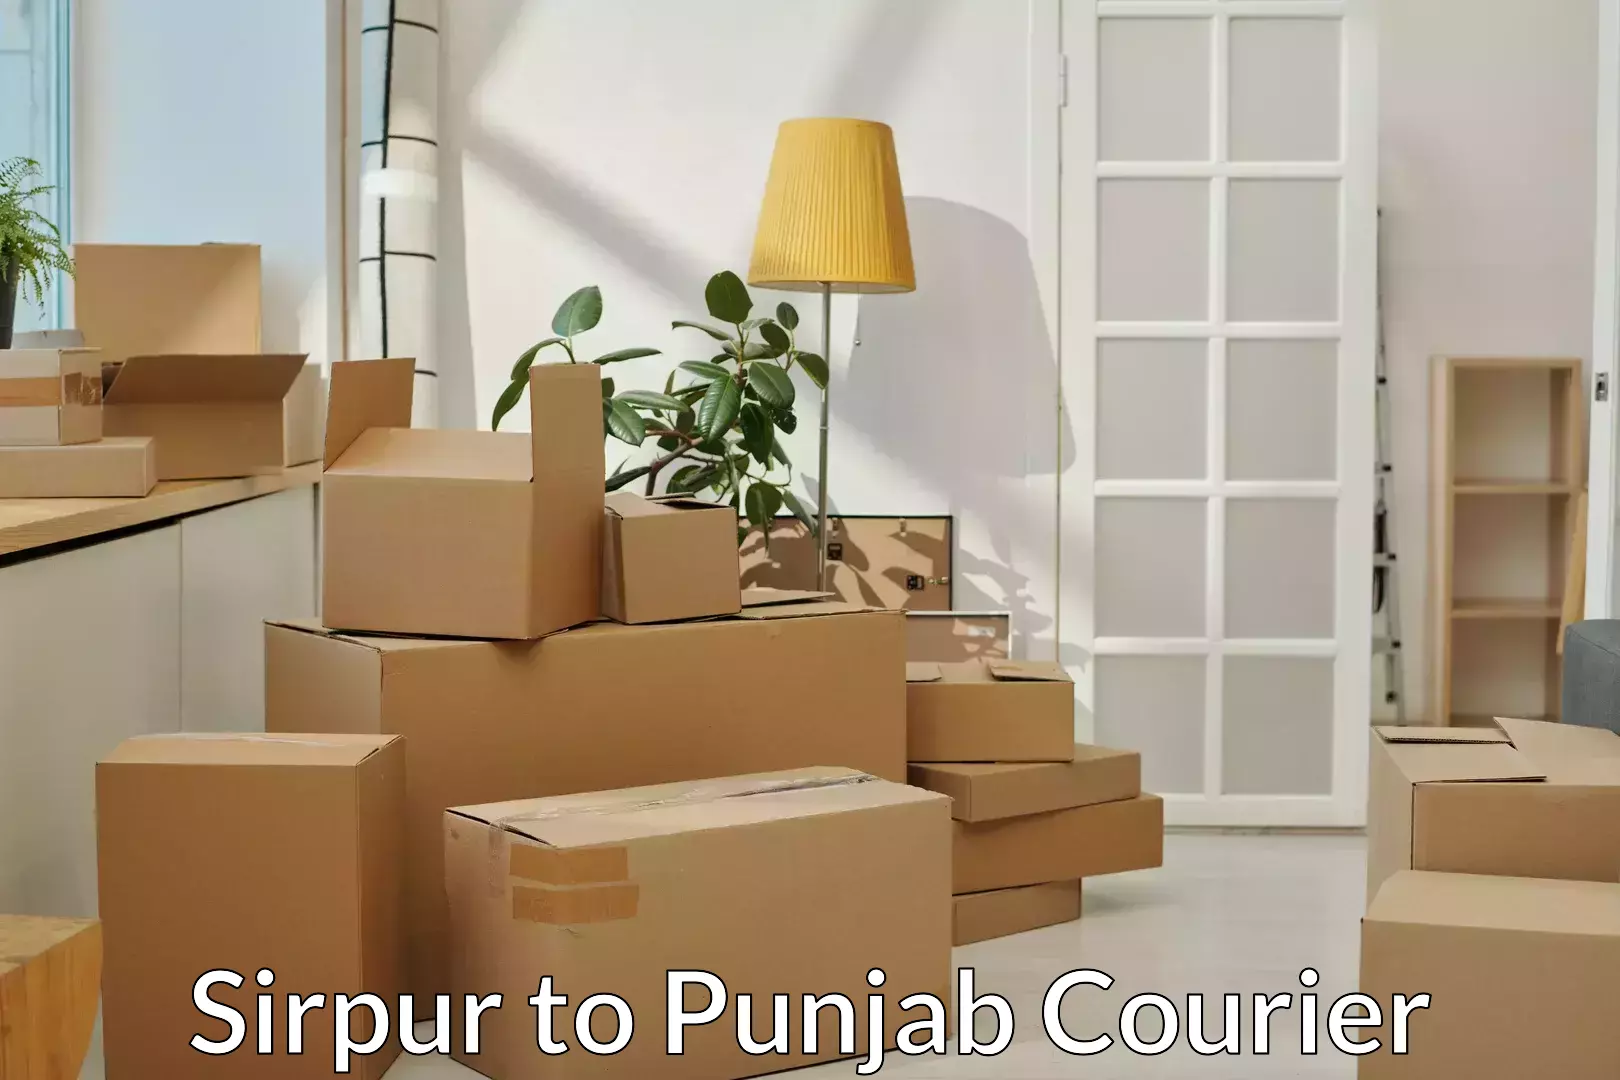 Professional home movers Sirpur to Punjab